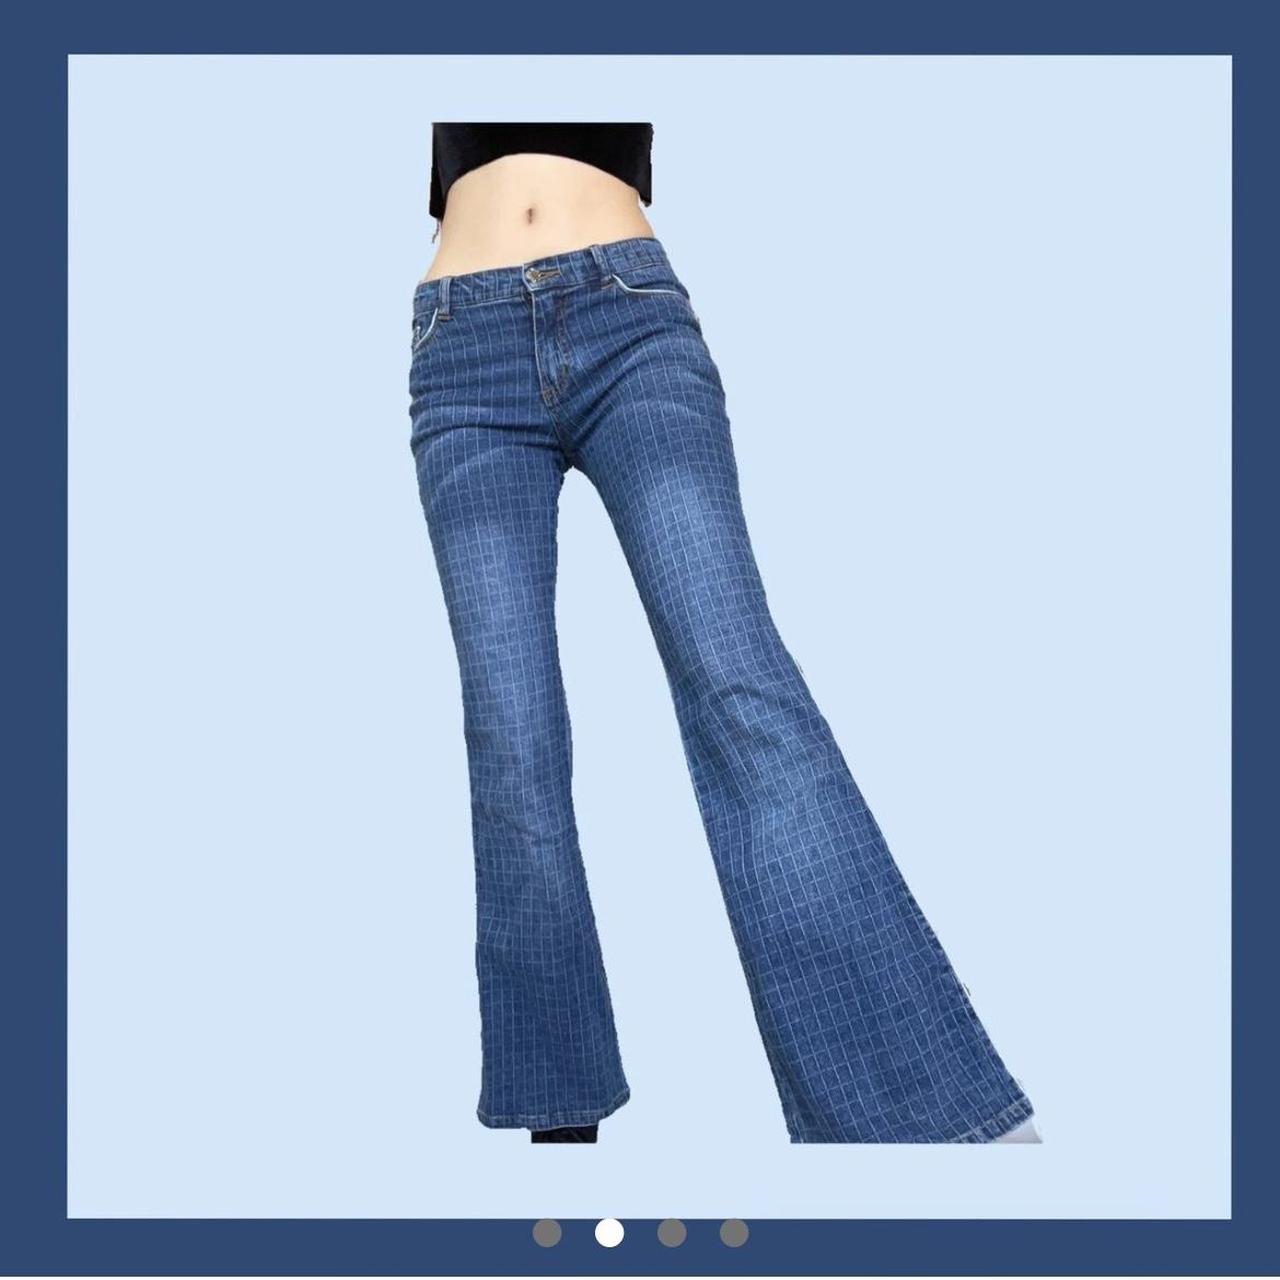 Hilfiger Denim Women's Blue and Navy Jeans